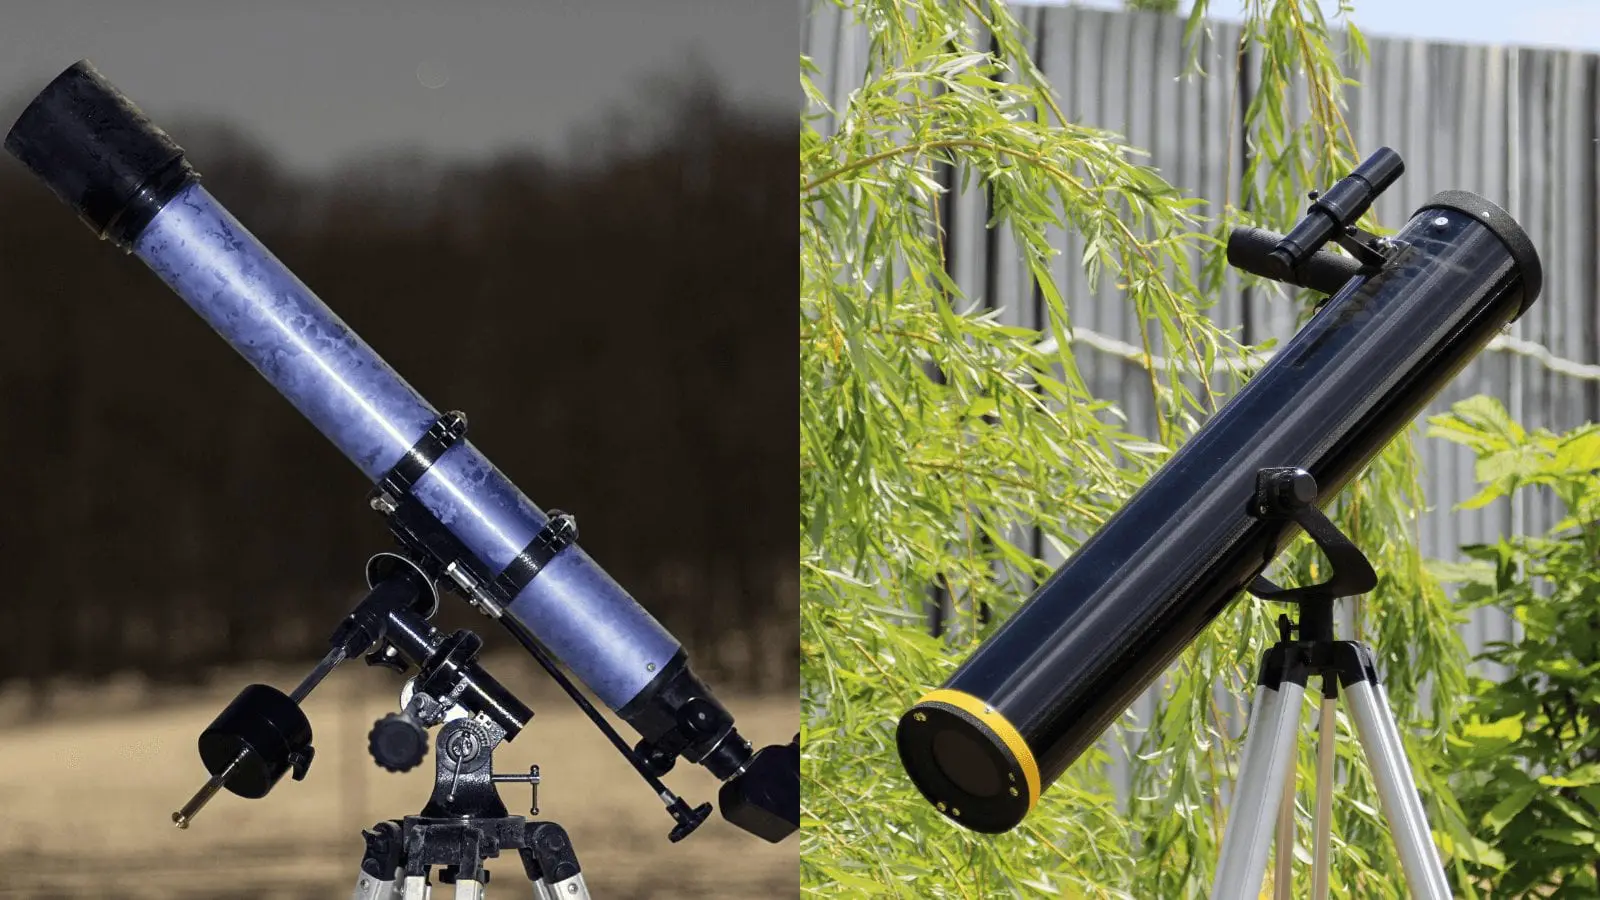 Refractor Telescope next to Reflector Telescope